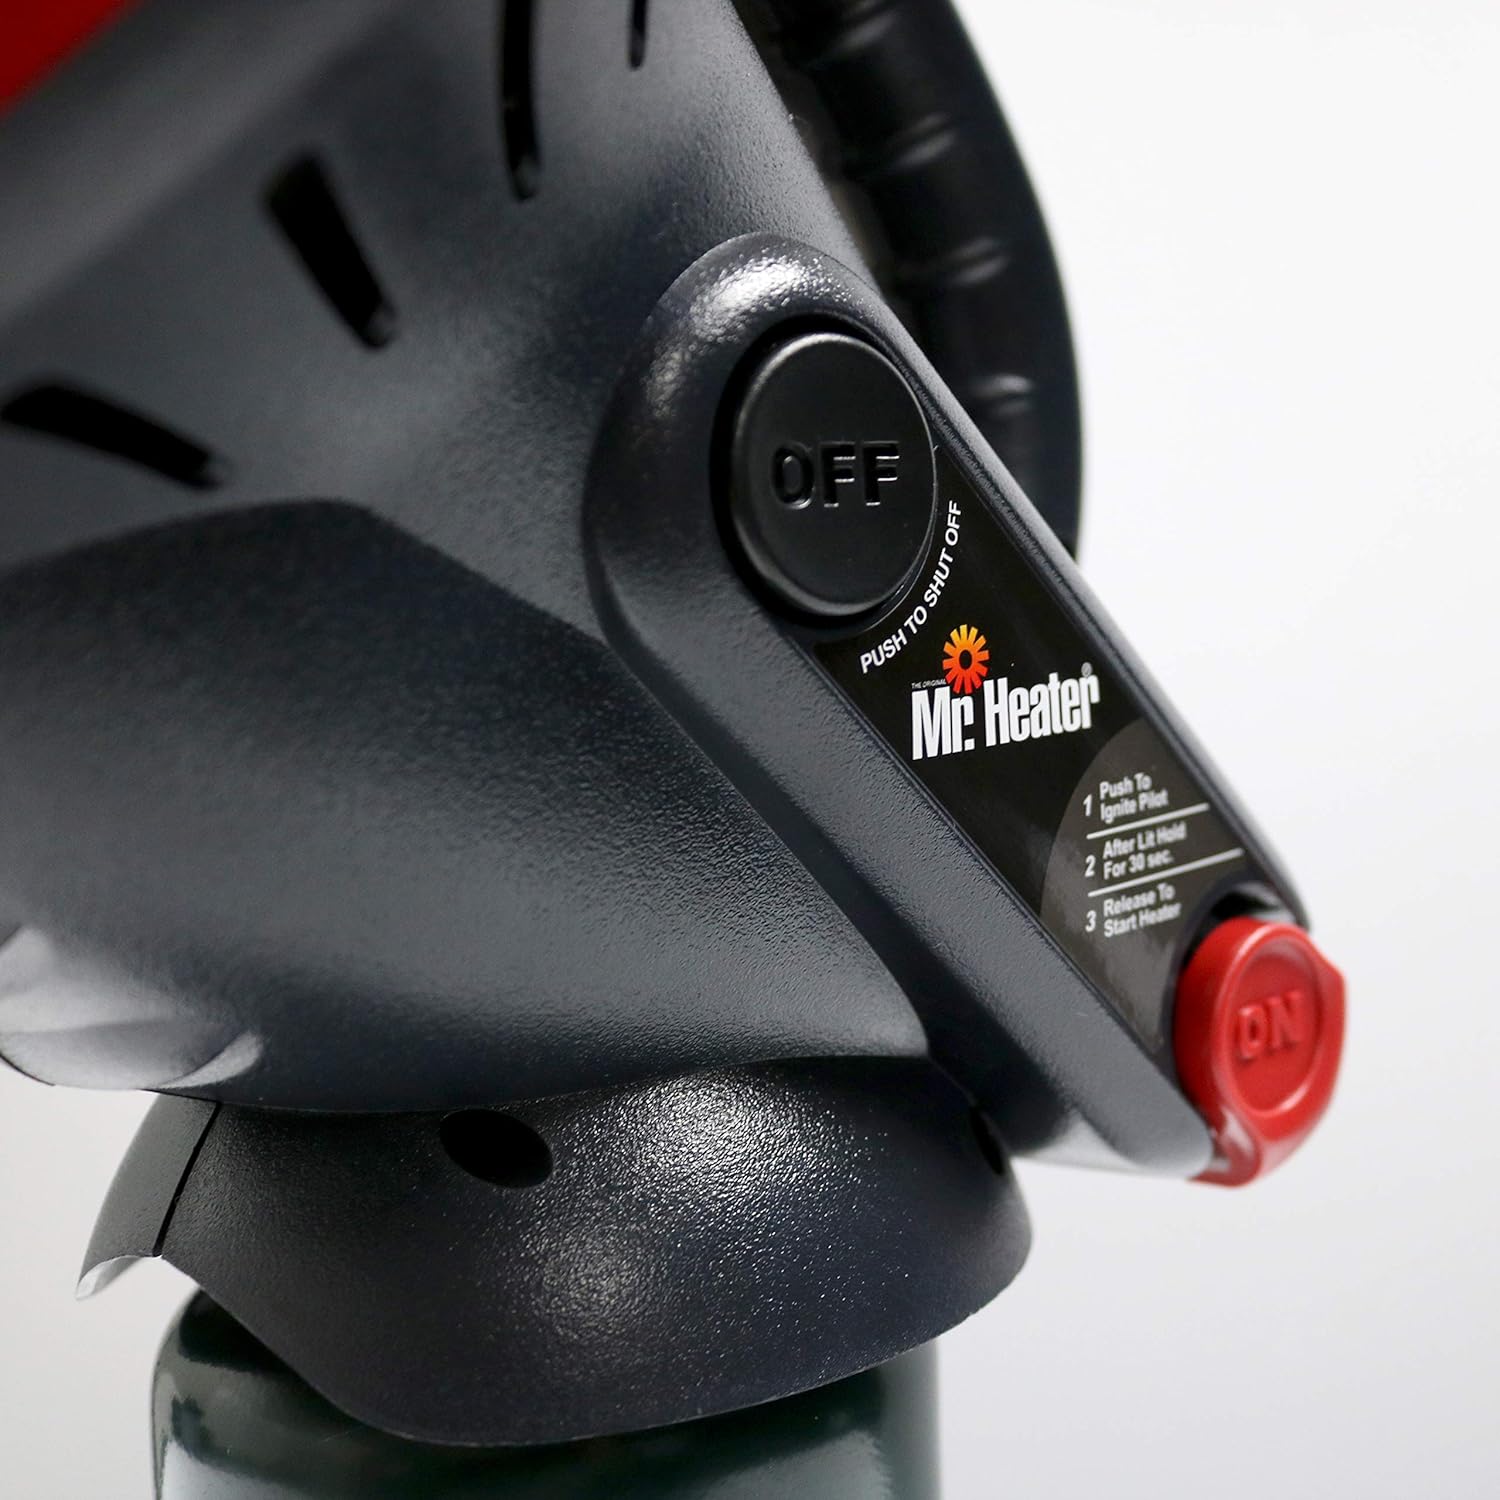 Mr. Heater F215100 MH4B Little Buddy 3800-BTU Indoor Safe Propane Heater With Portable|Low-Oxygen Safety Shutoff|Tip-Over Protection|Lightweight, Medium , Black/Red - Mr. Heater Little Buddy Propane Heater Review